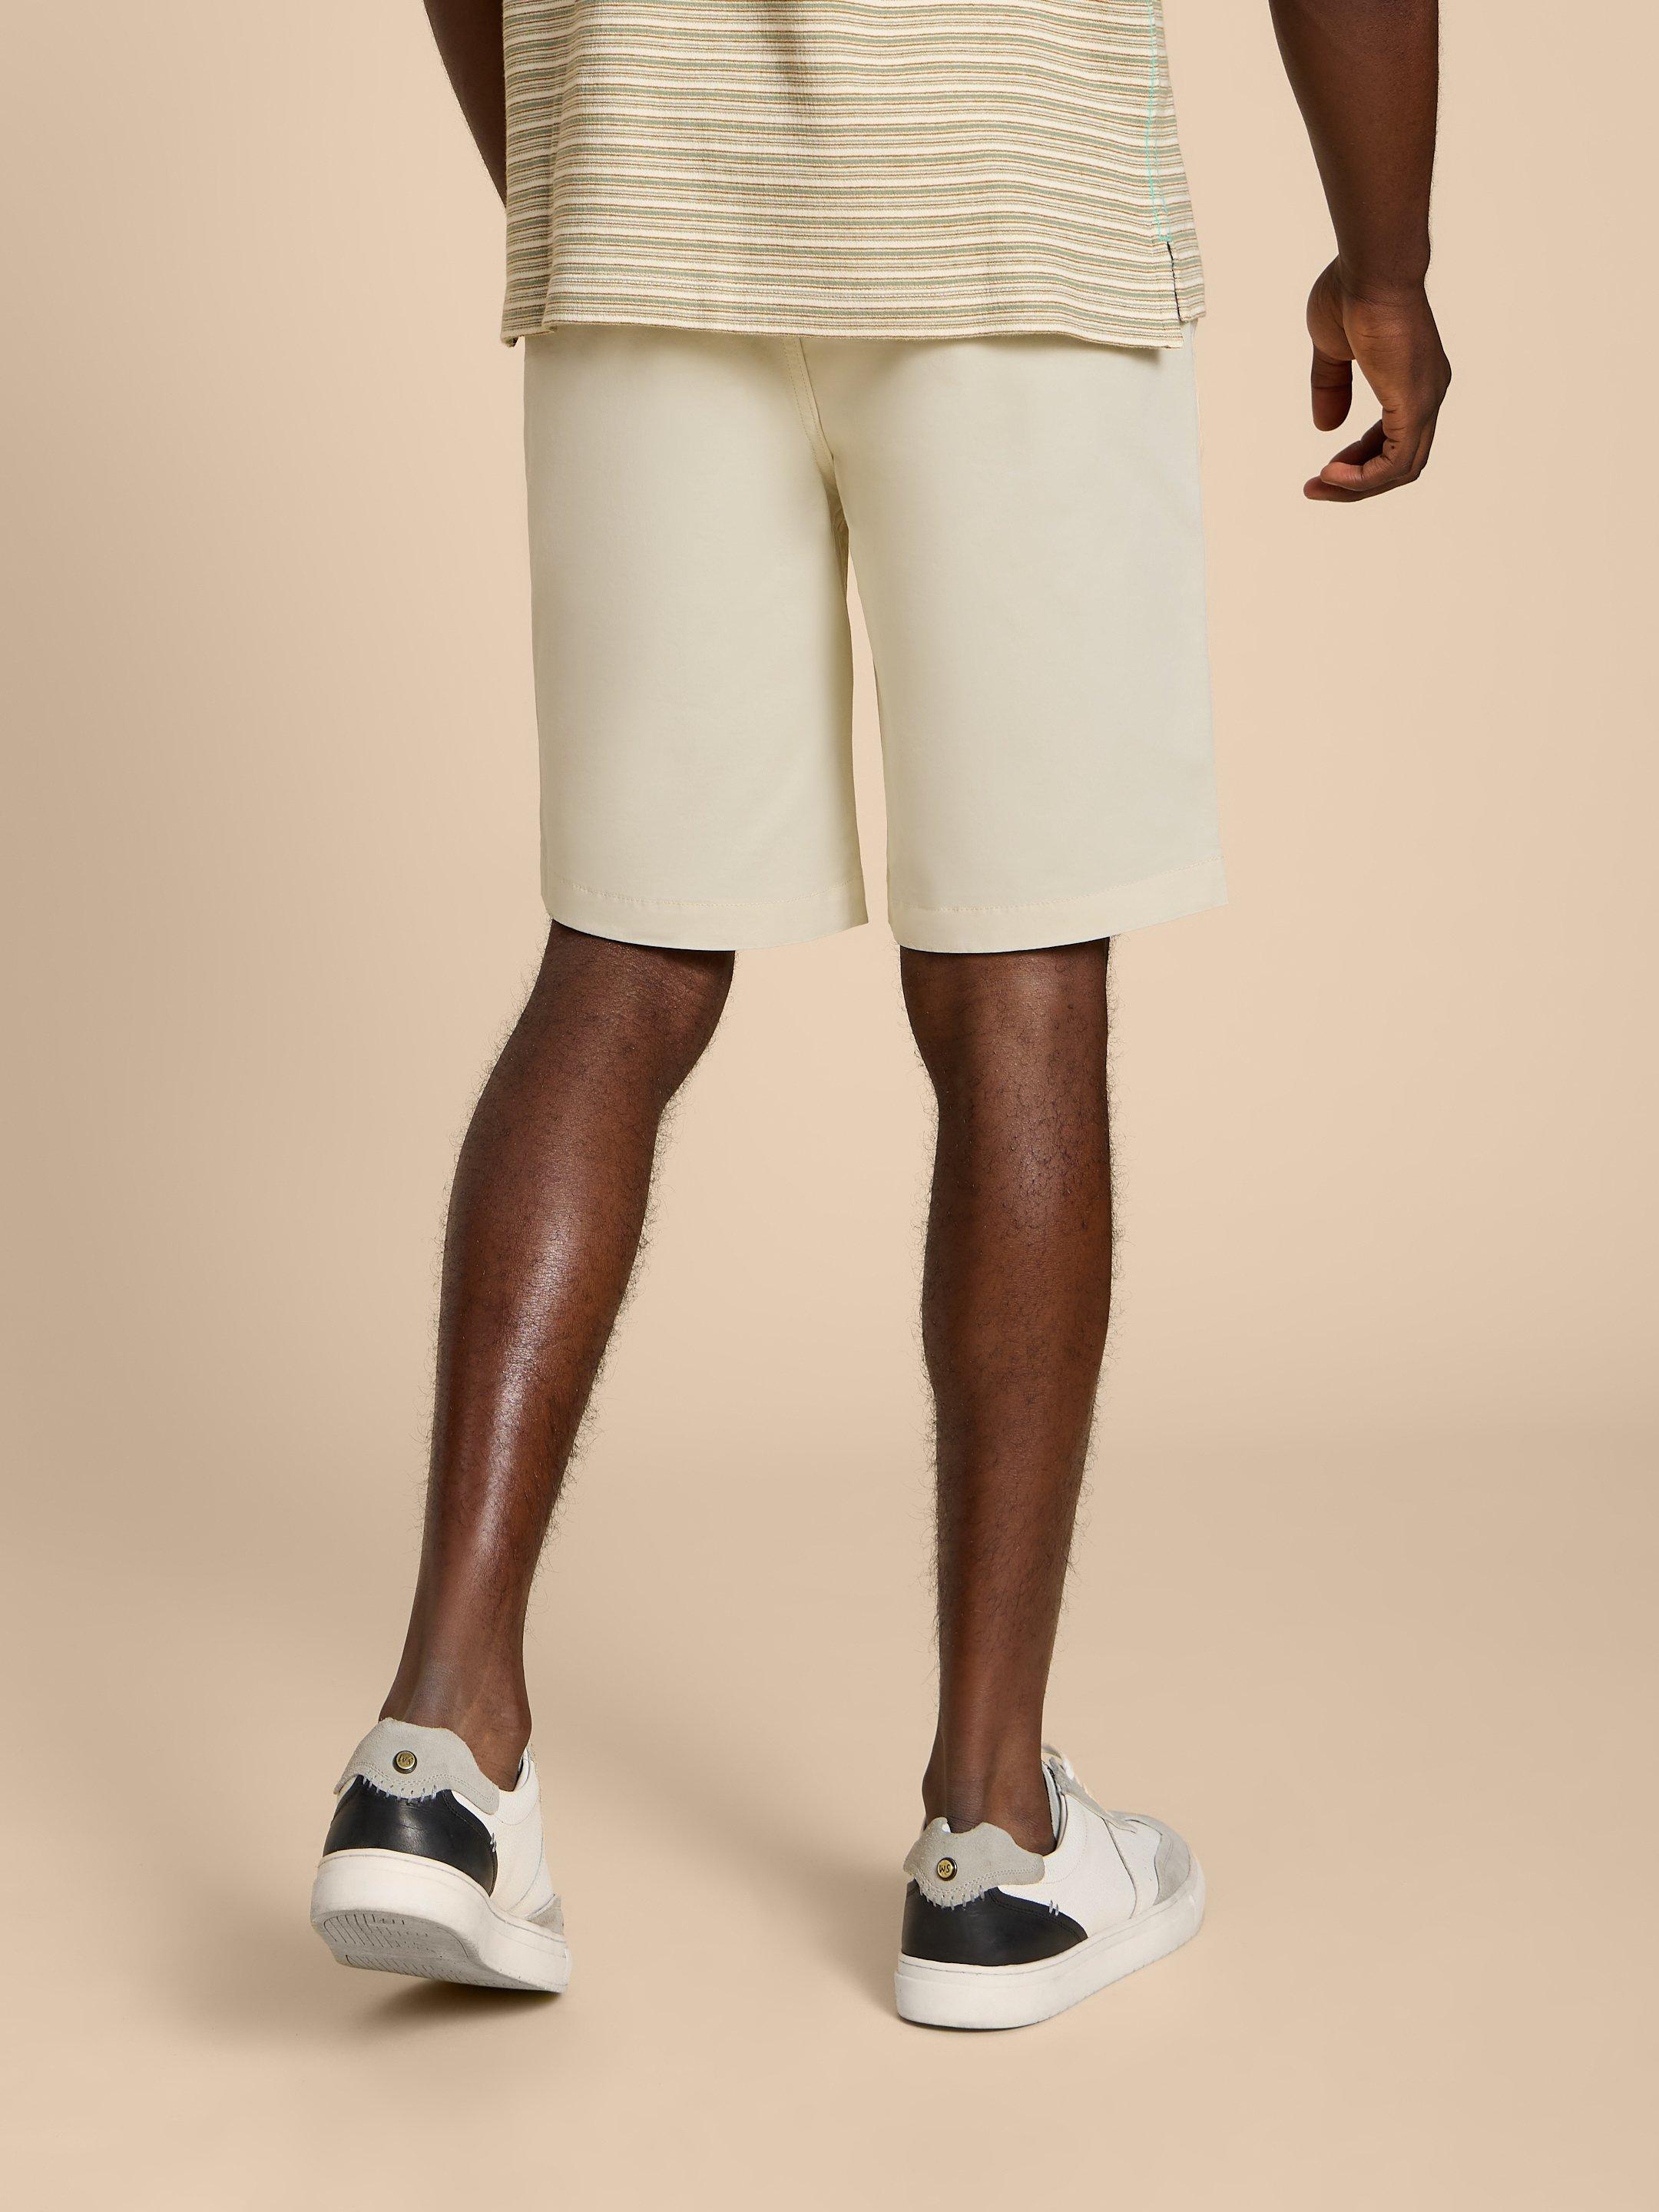 Omnitau Men's Prepster Organic Cotton Chino Shorts - Sand